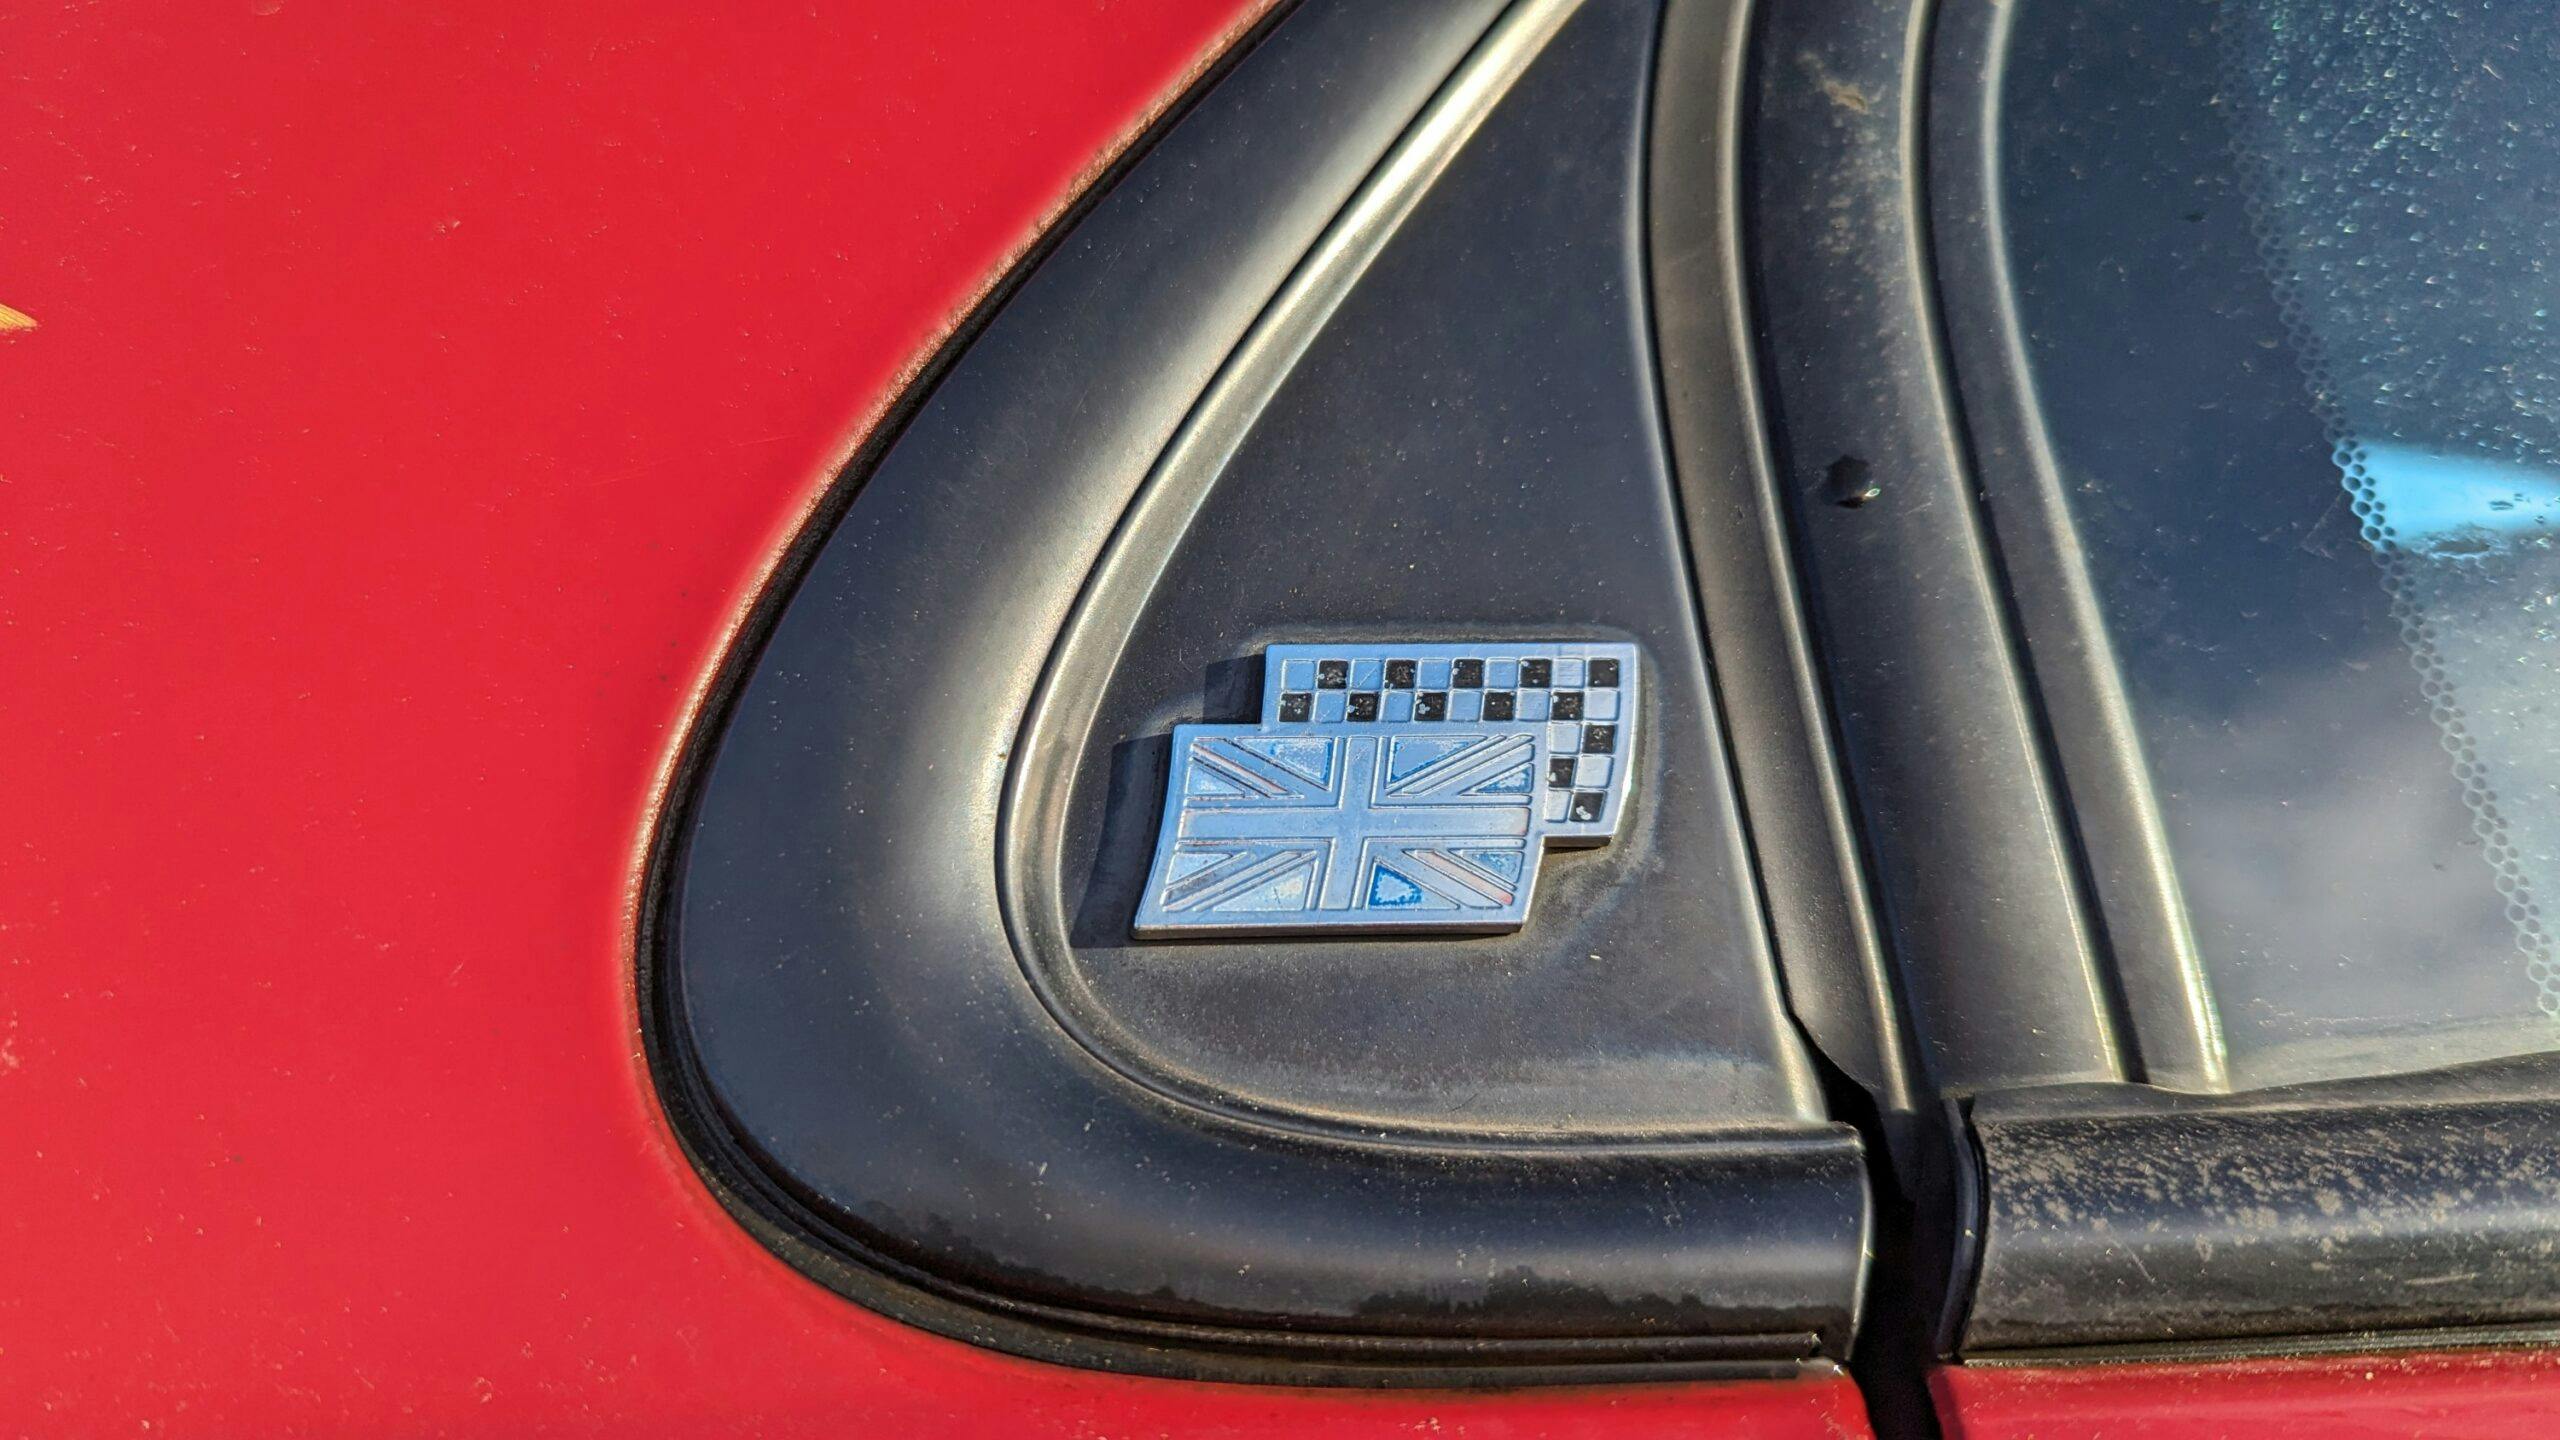 2005 MG ZT 190 sticker detail